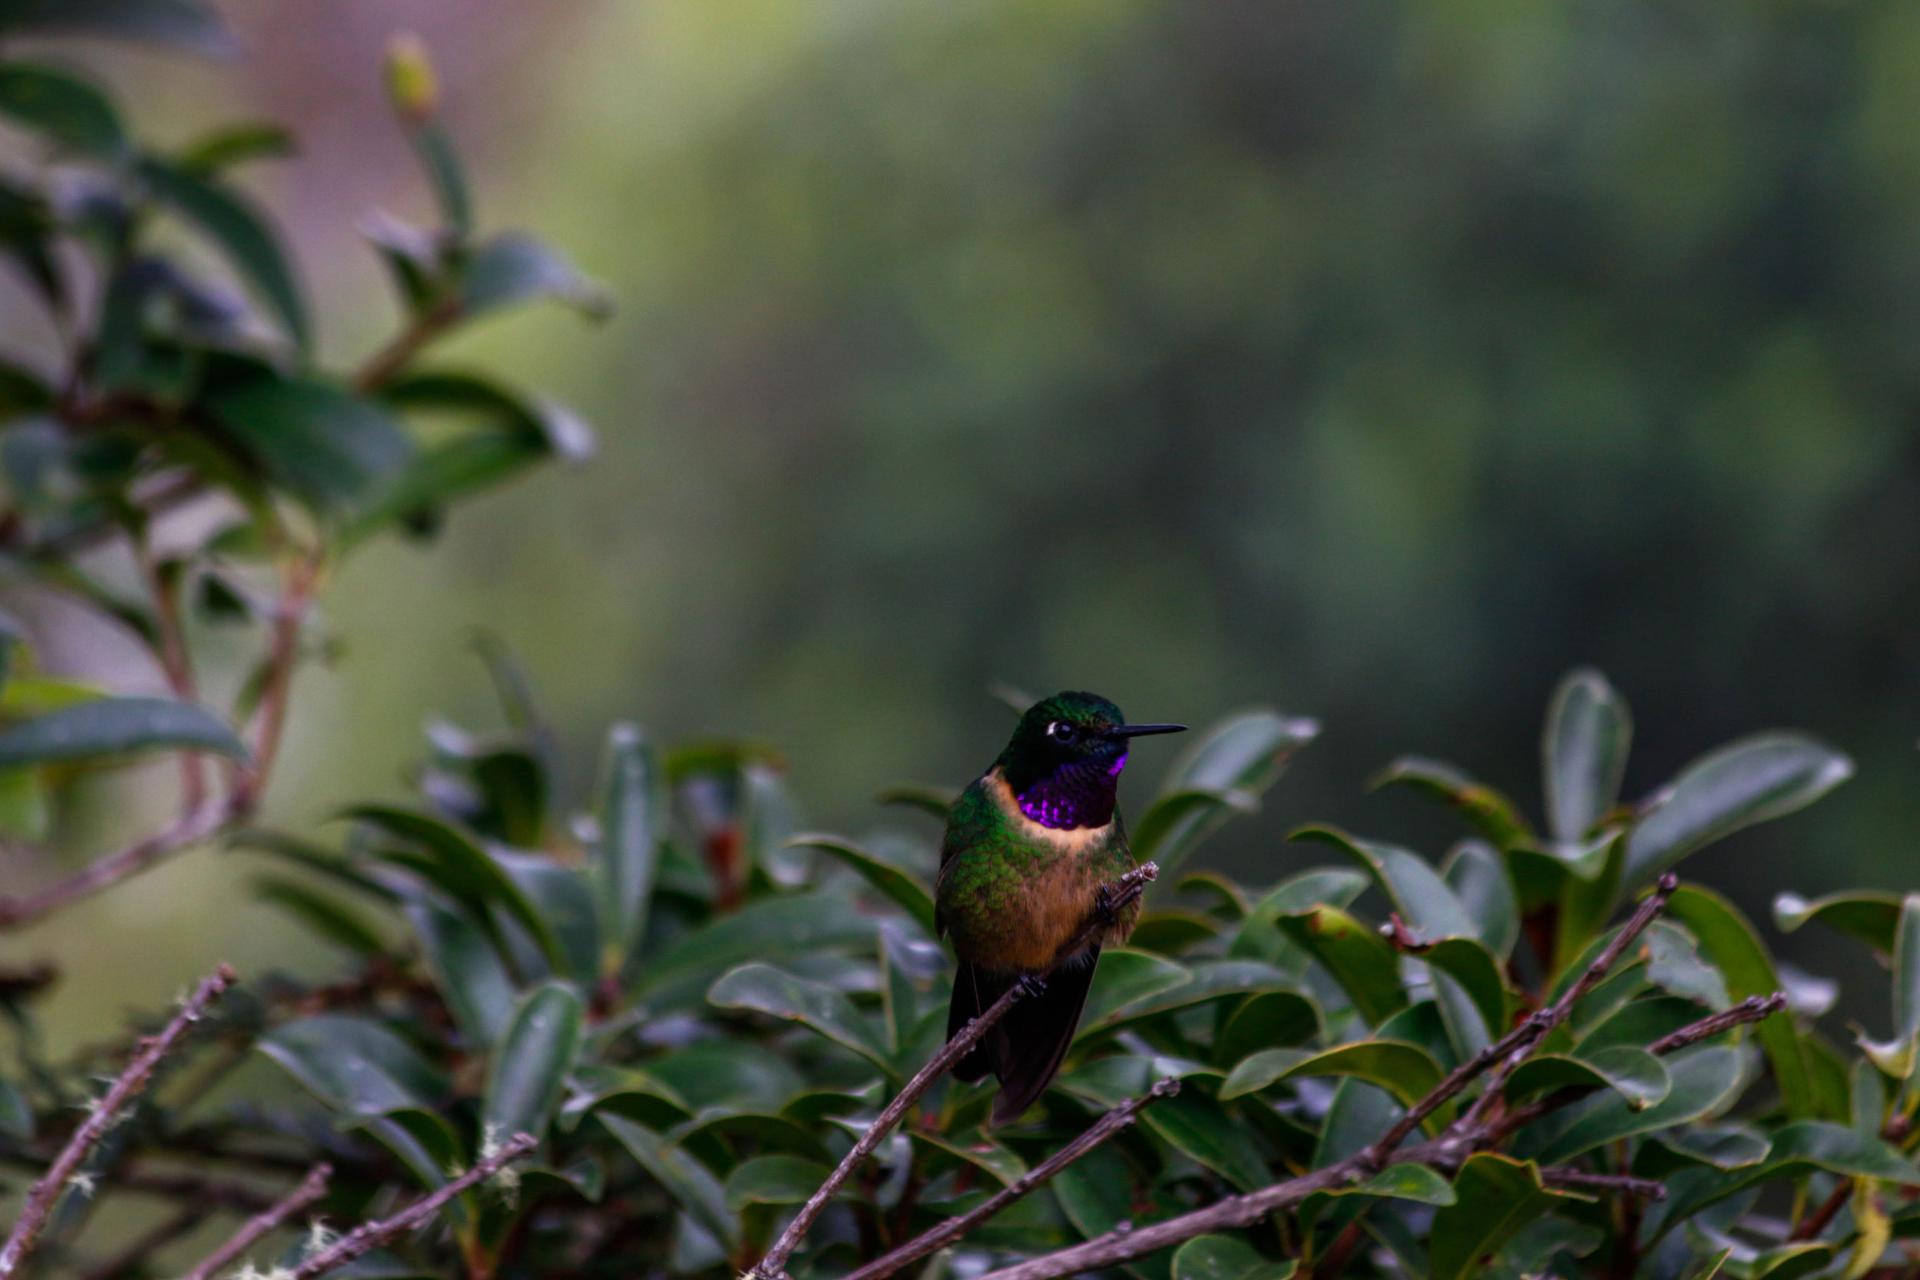 An amethyst-throated sunangel hummingbird is shown sitting on a branch.